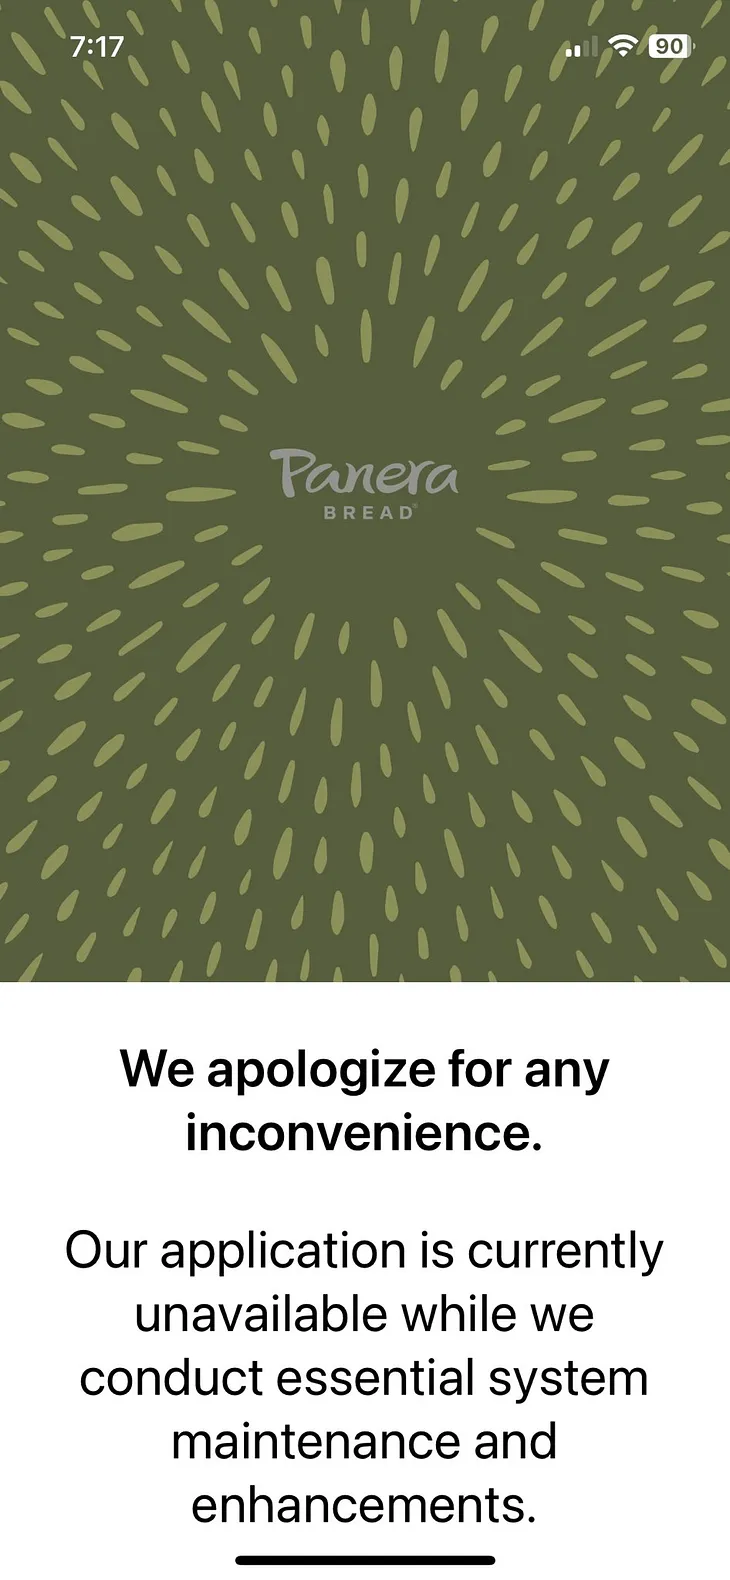 Panera App Down image